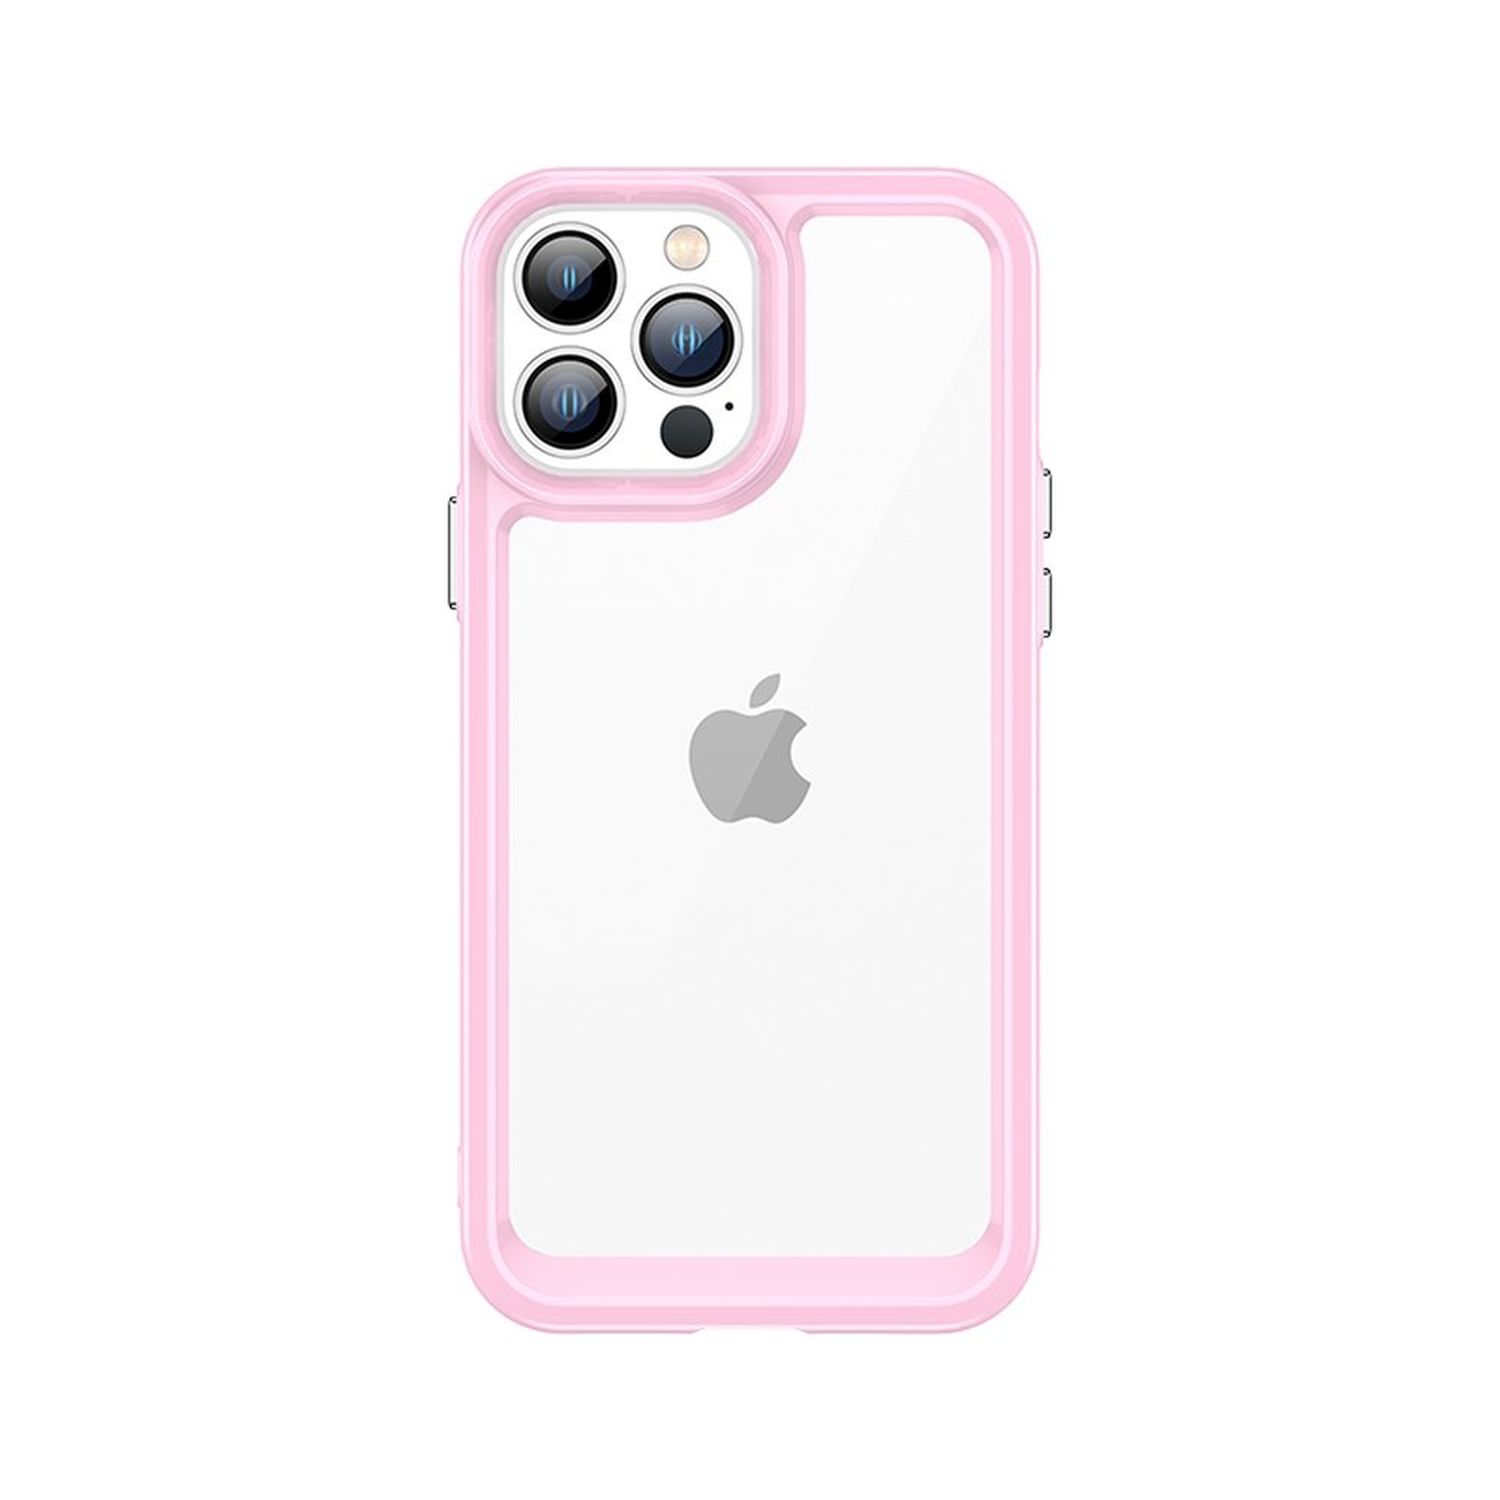 Backcover, Handy-Hülle Hardcover Apple, Case iPhone SE, SE Hülle mit kompatibel Cover COFI Space Outer Pink Pink, iPhone Gelrahmen Schutz